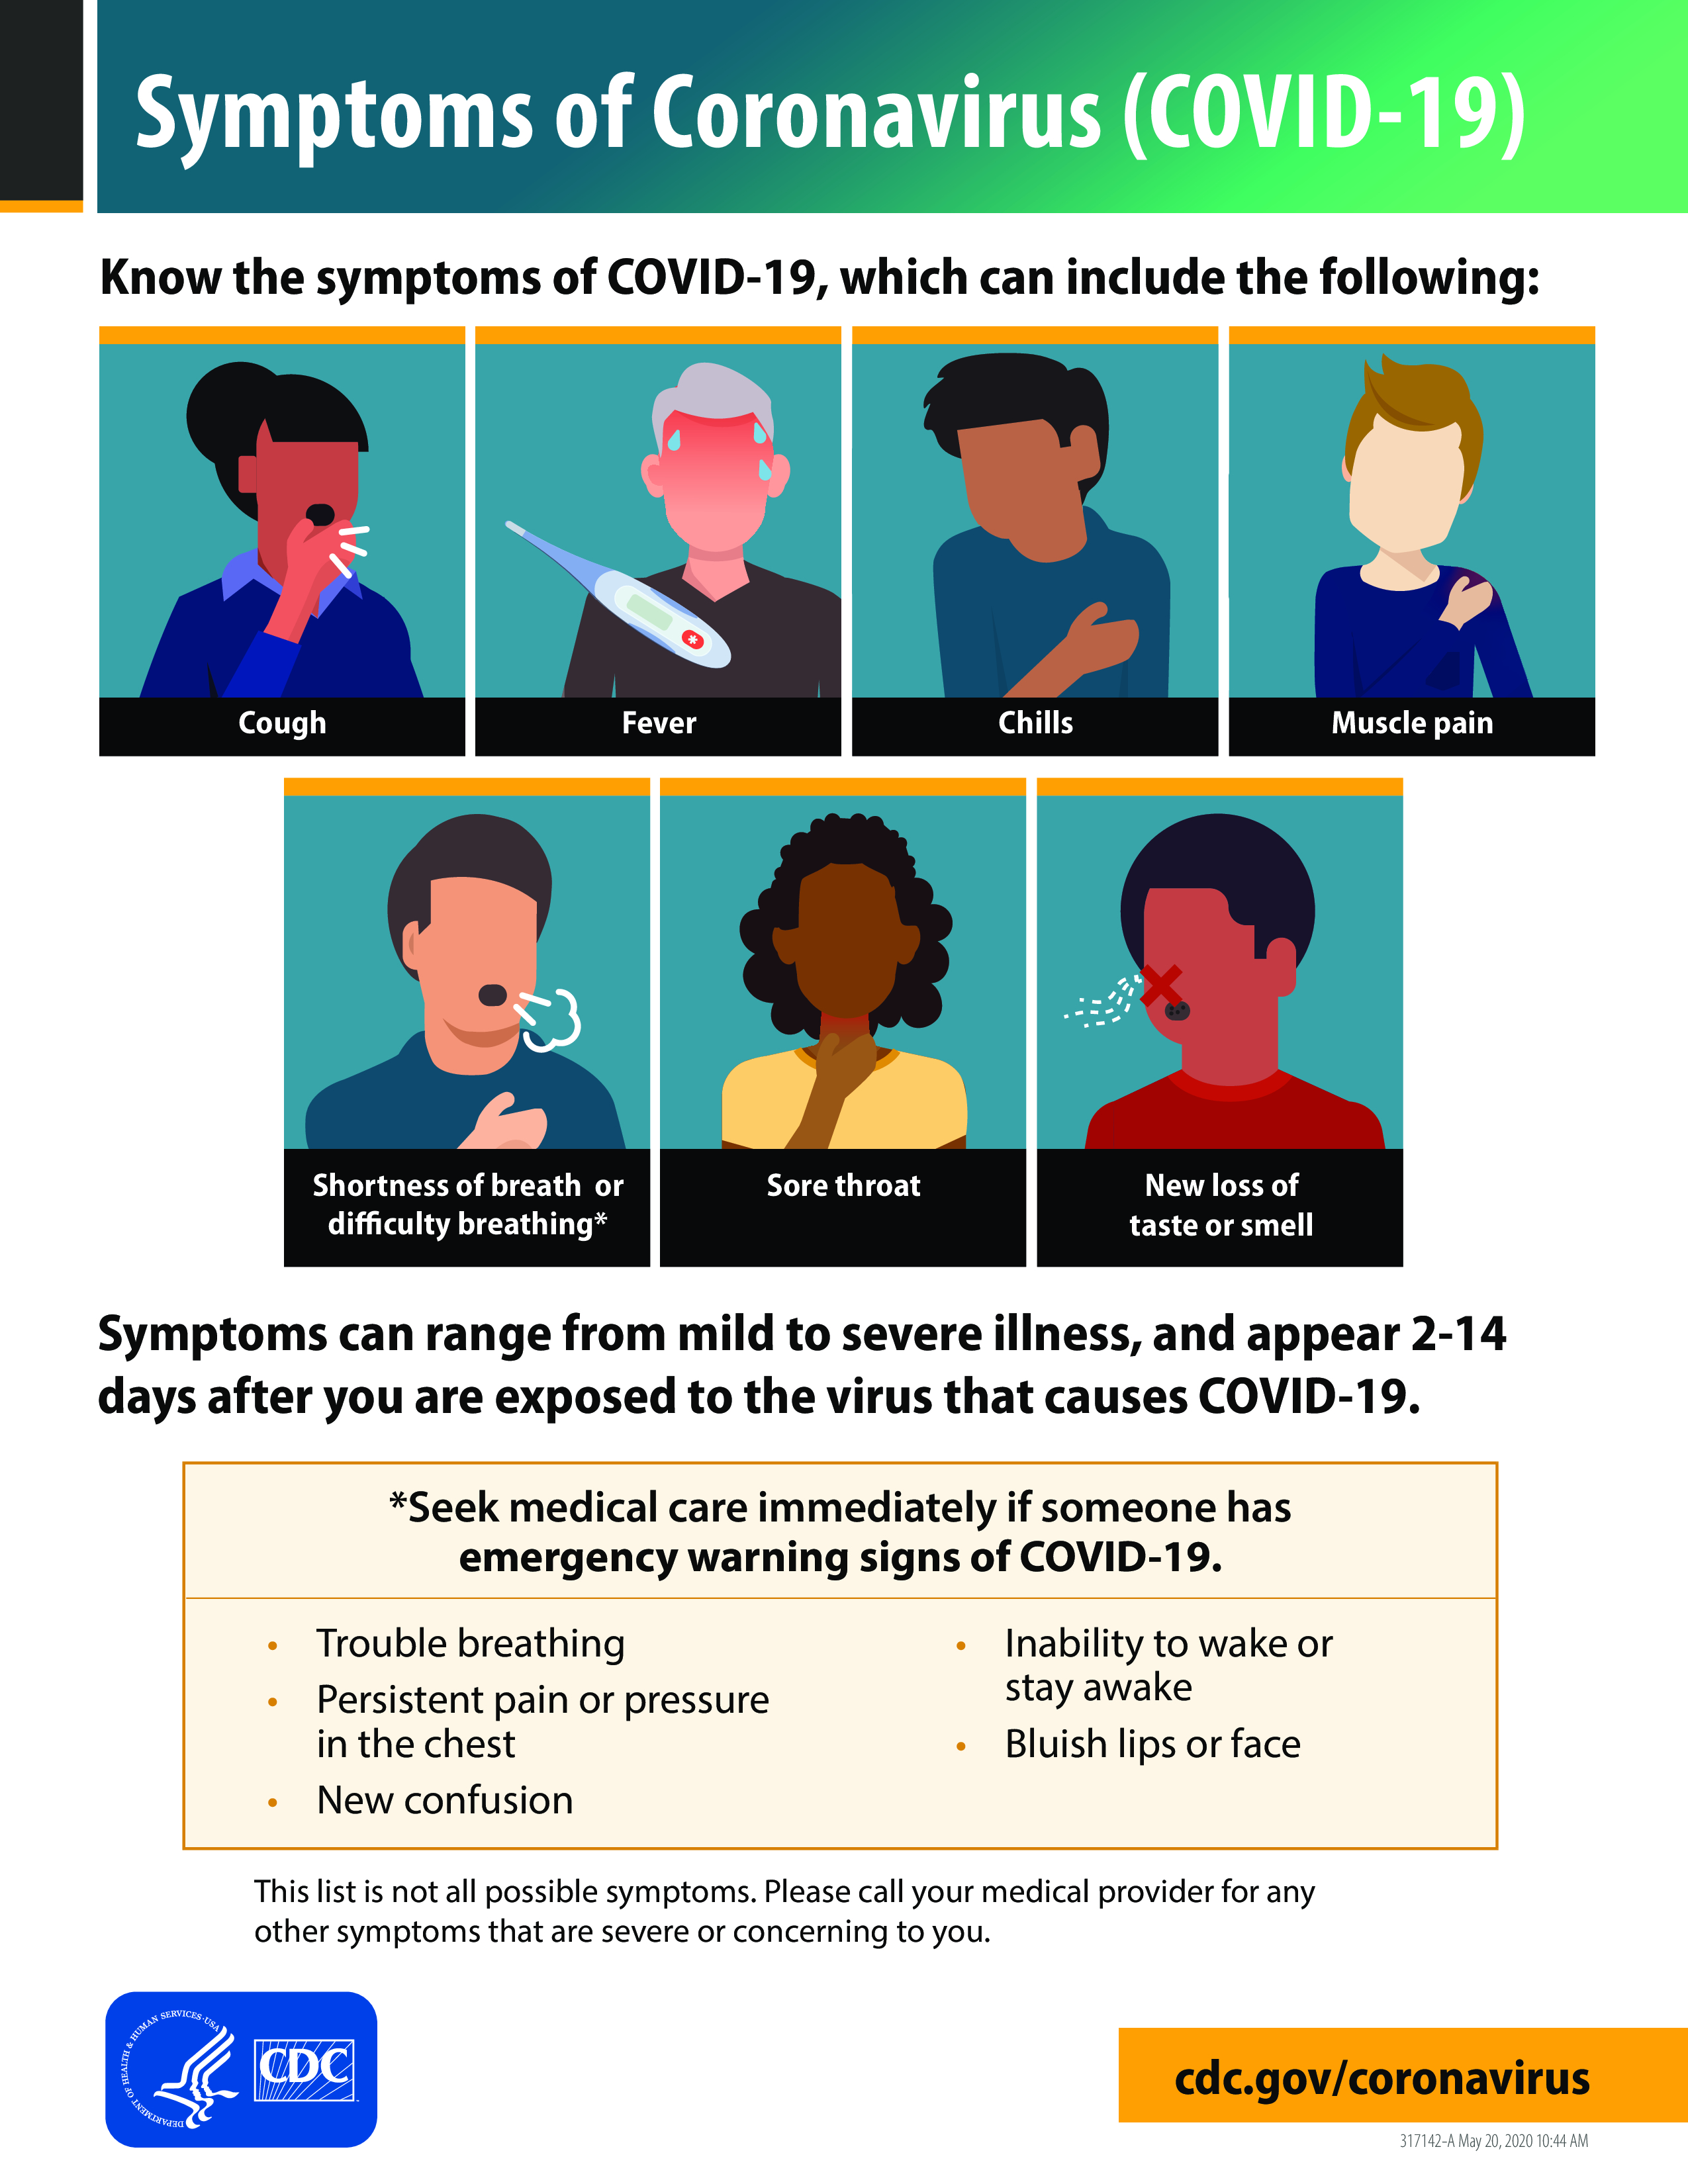 Covid-19 "Symptoms" 8.5 x 11 poster